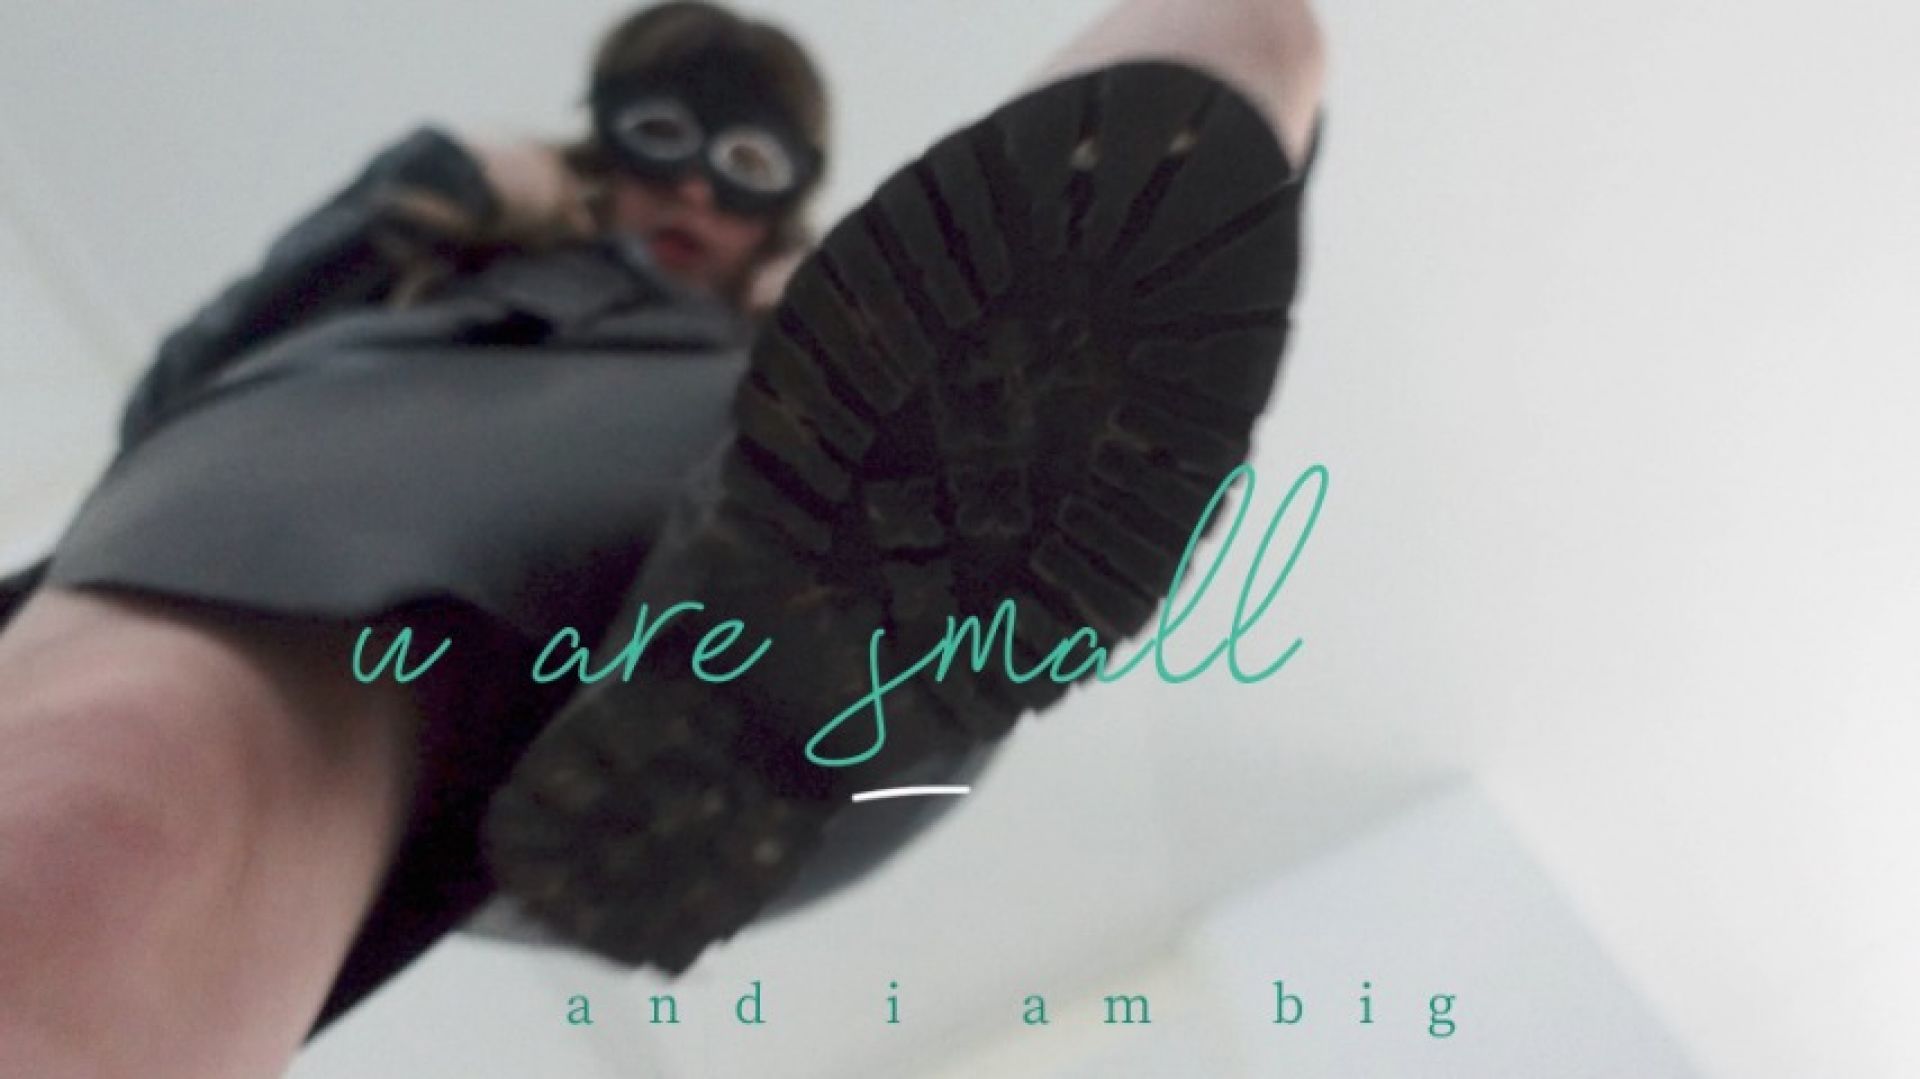 U are small and i am big